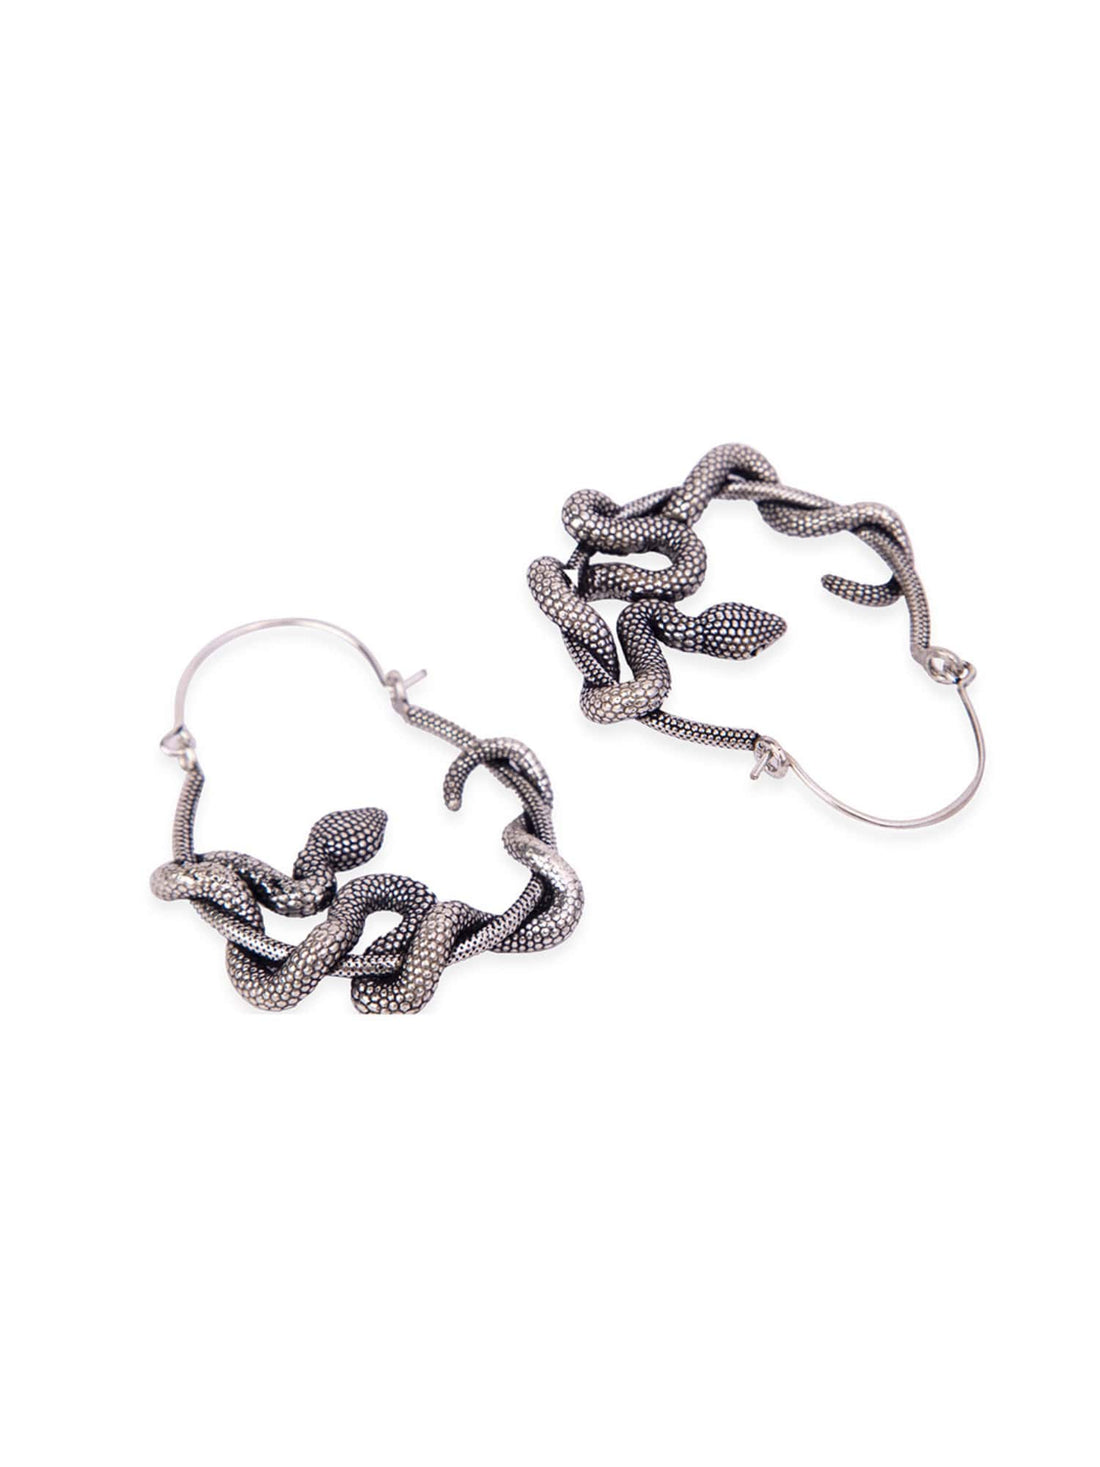 Party Wear Hoops Earrings - Elegant Serpents Gold and Silver-Plated Brass Earrings By Studio One Love